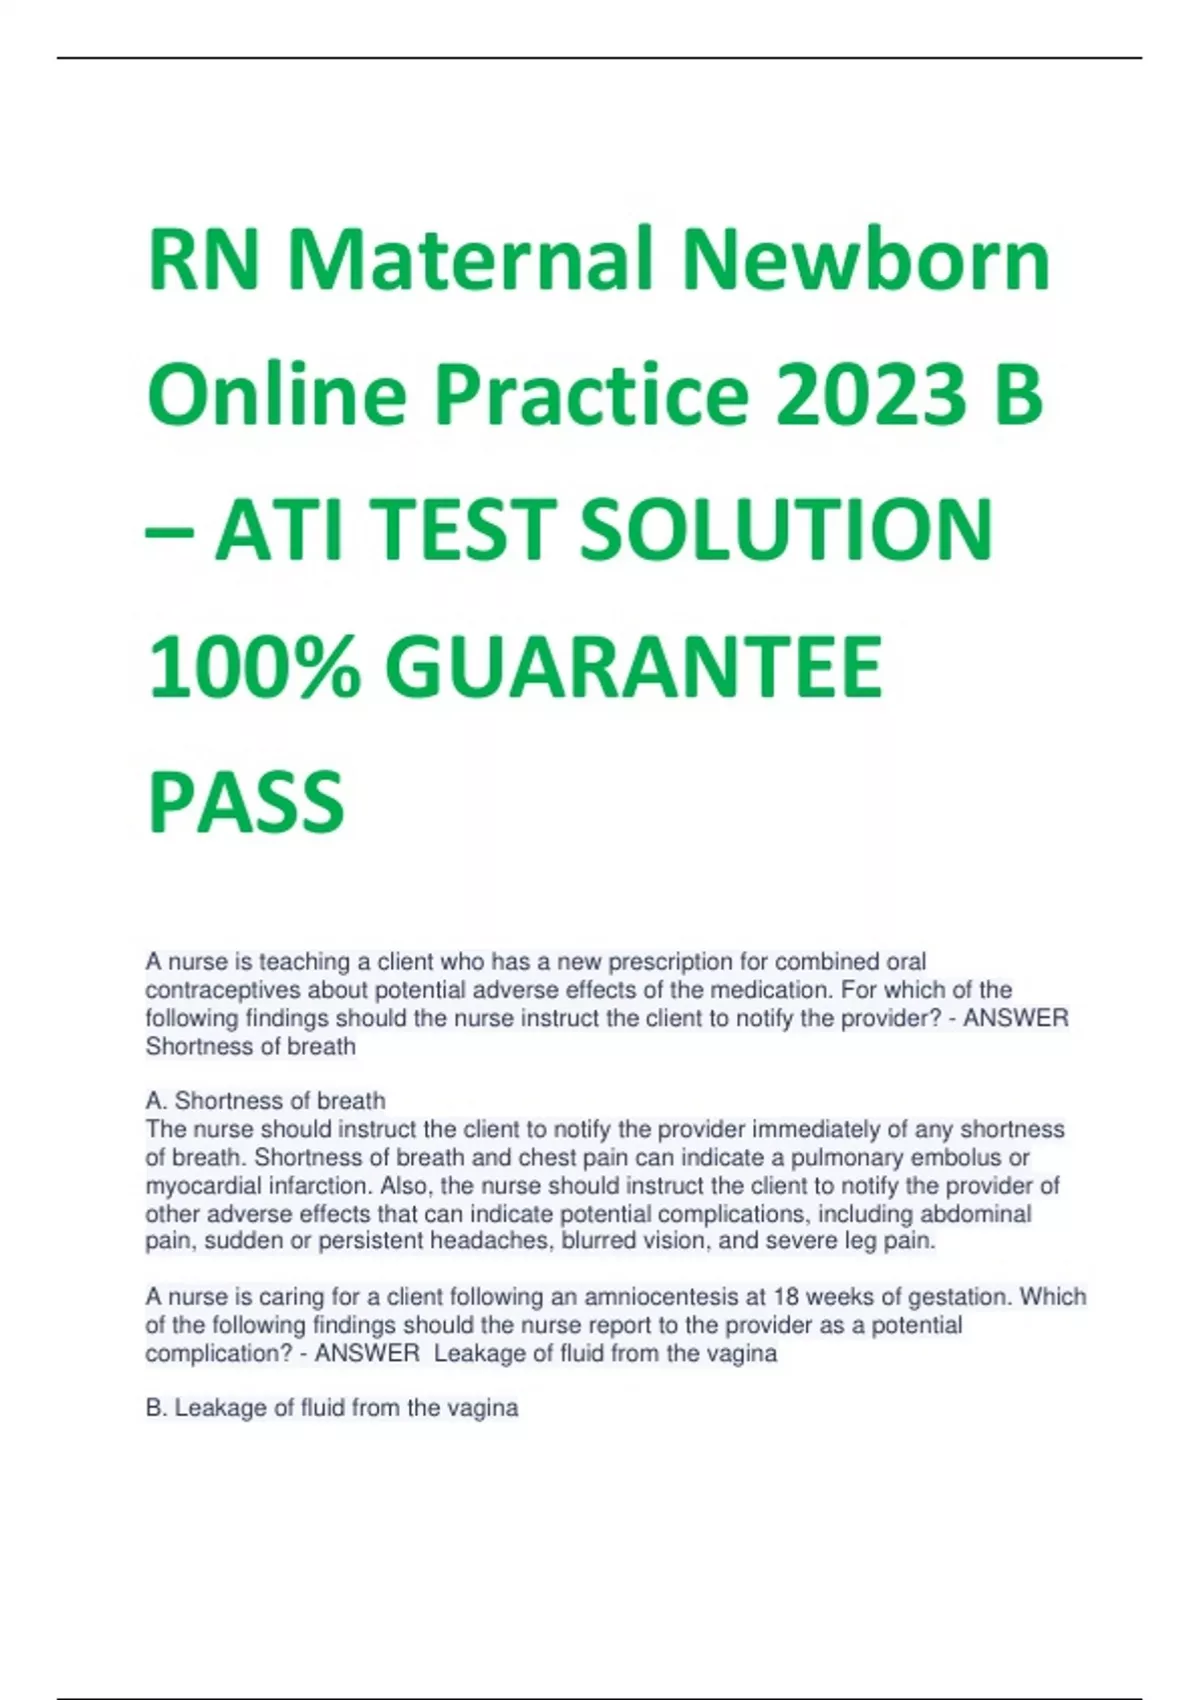 RN Maternal Newborn Online Practice 2023 B ATI TEST SOLUTION 100